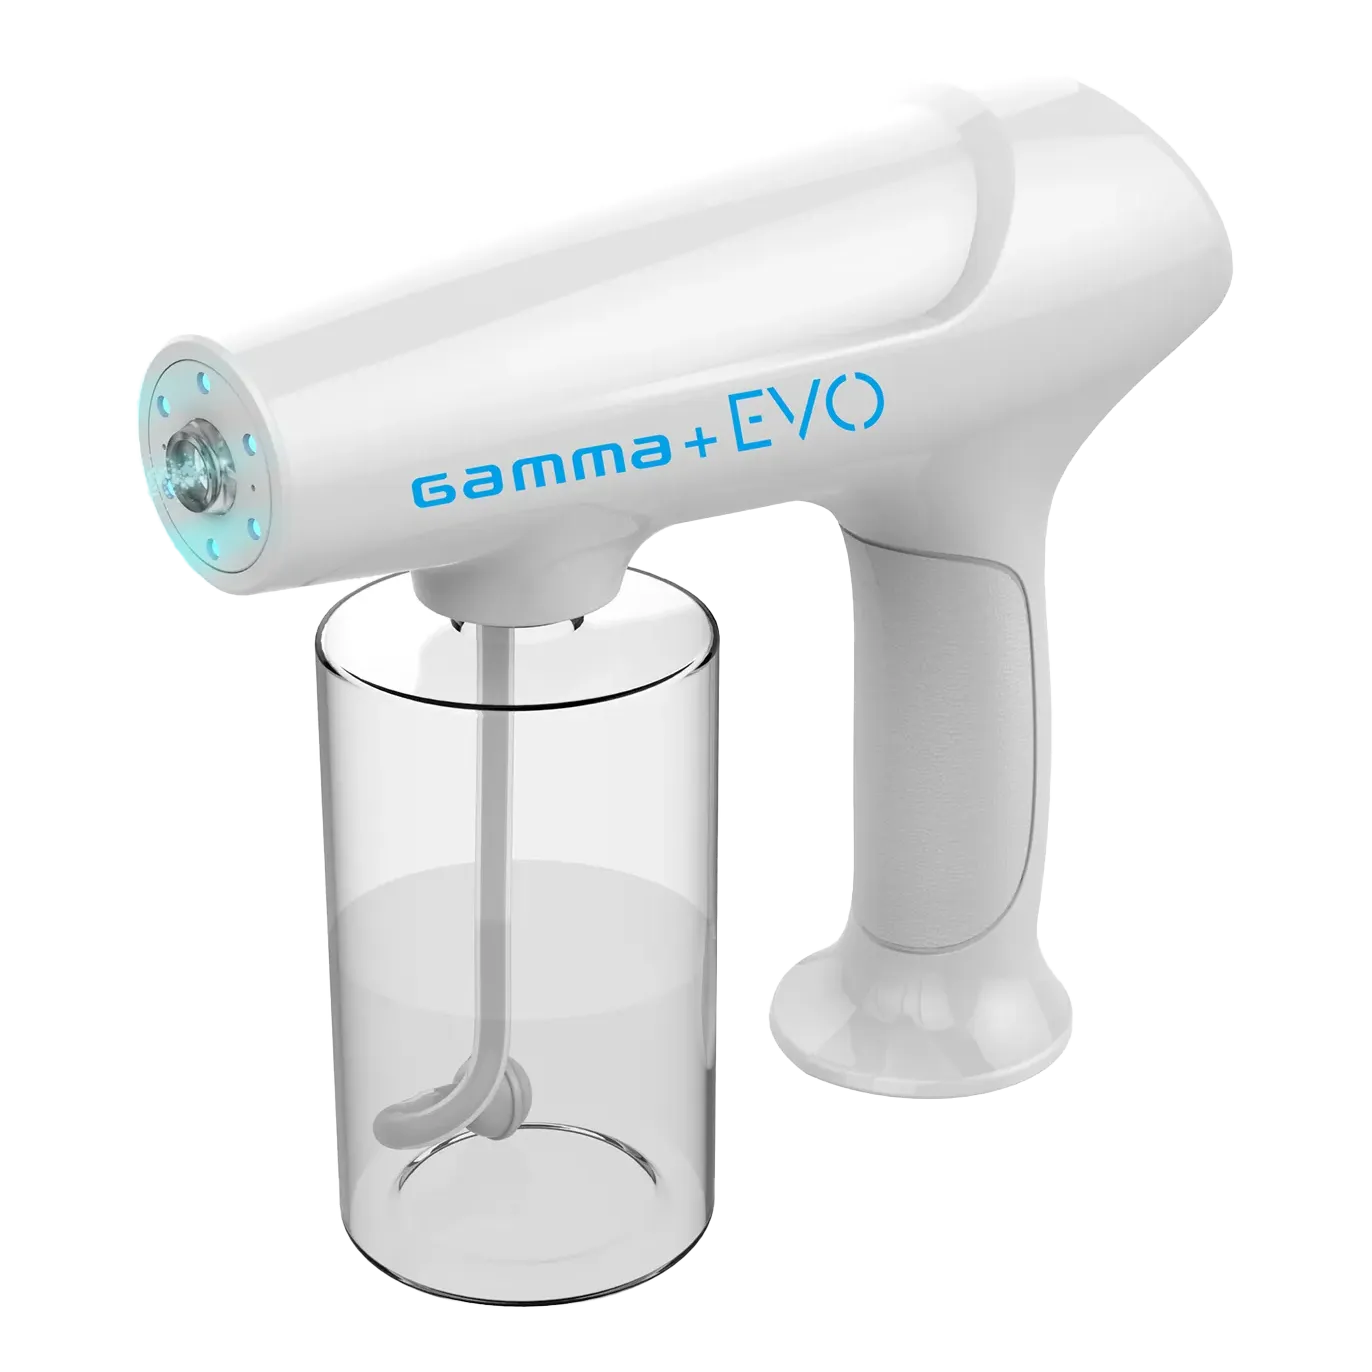 Gamma + EVO Nano Mister spraymaskin 